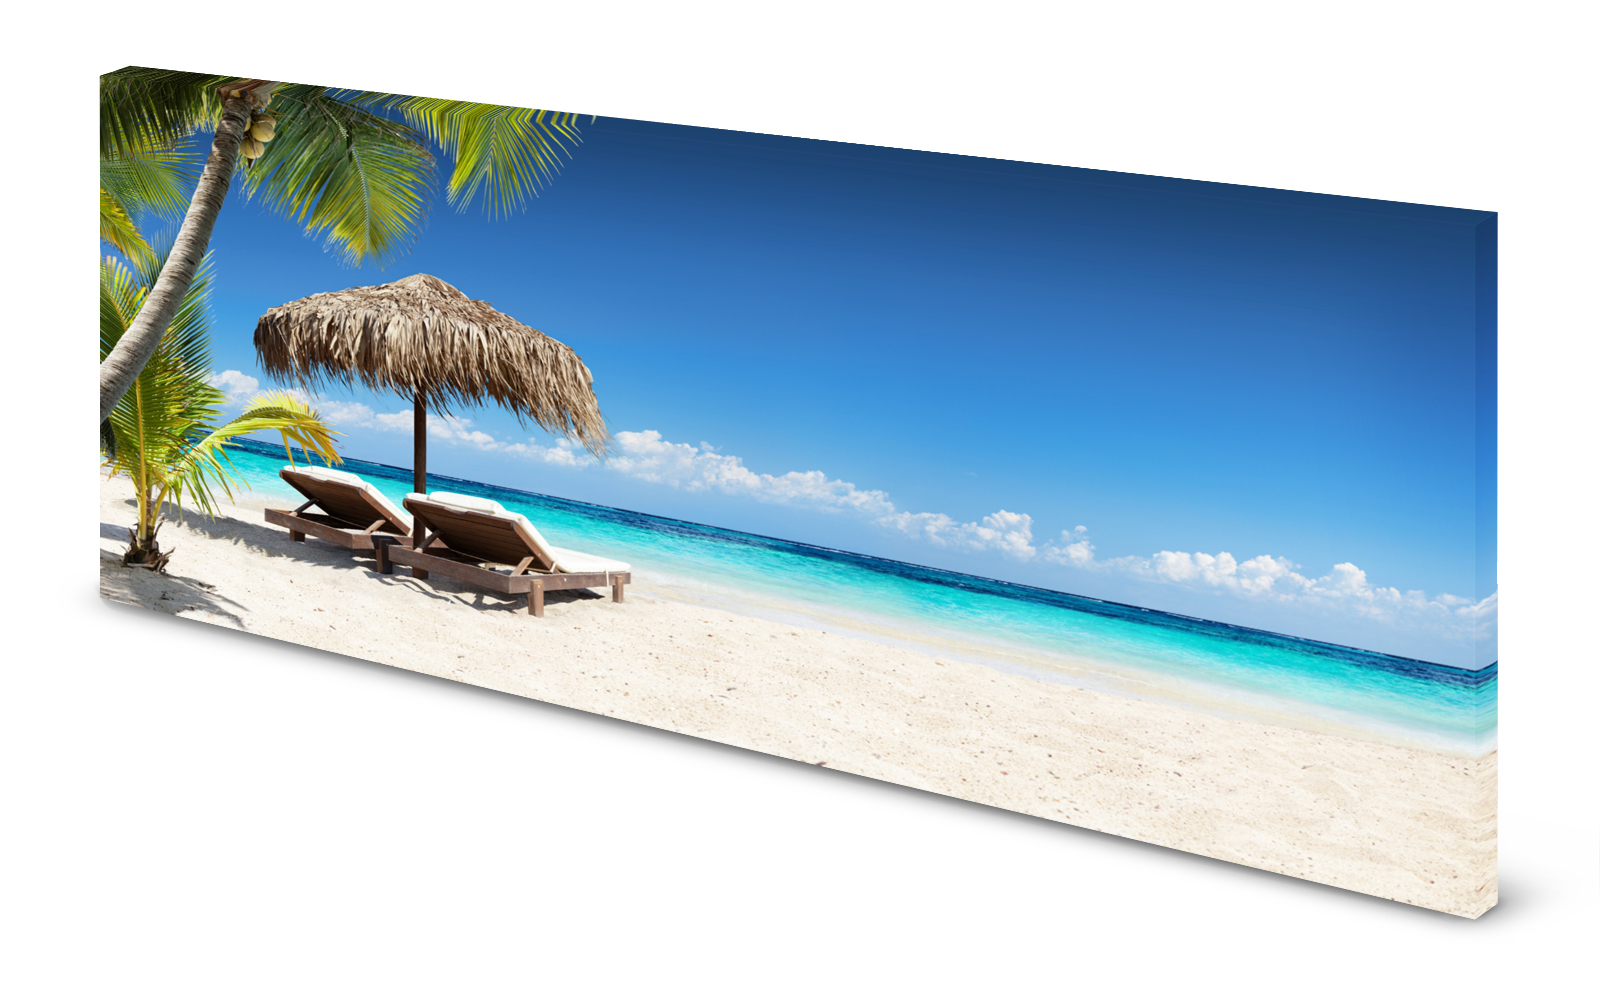 Magnettafel Pinnwand Bild Insel Karibik Strand Sonnenschirm Liege gekantet